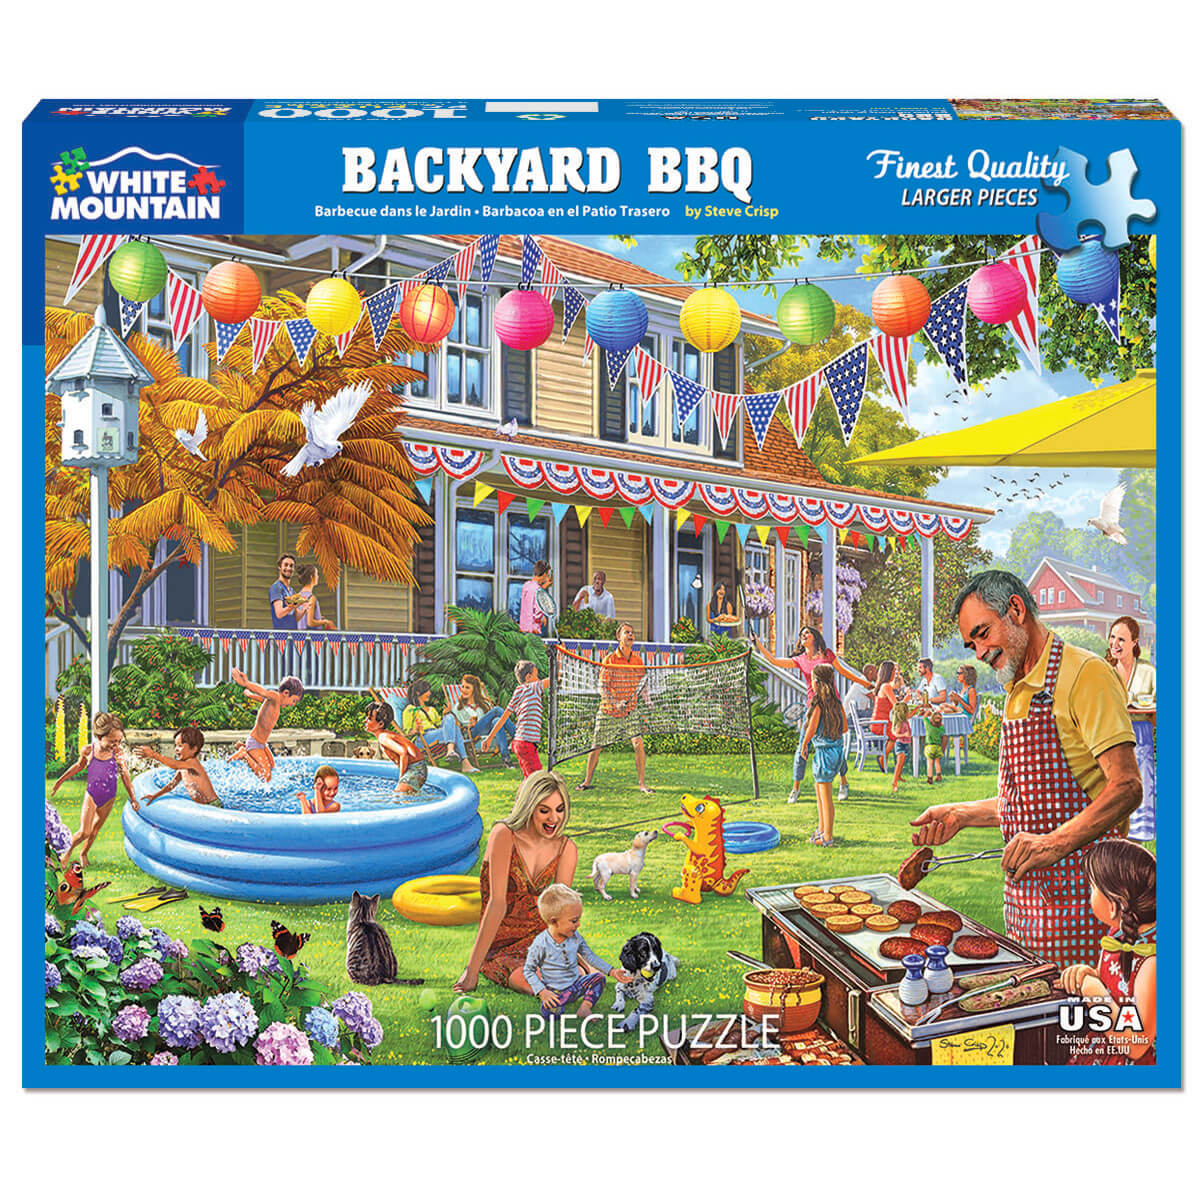 White Mountain Puzzles Backyard BBQ 1000 Piece Jigsaw Puzzle